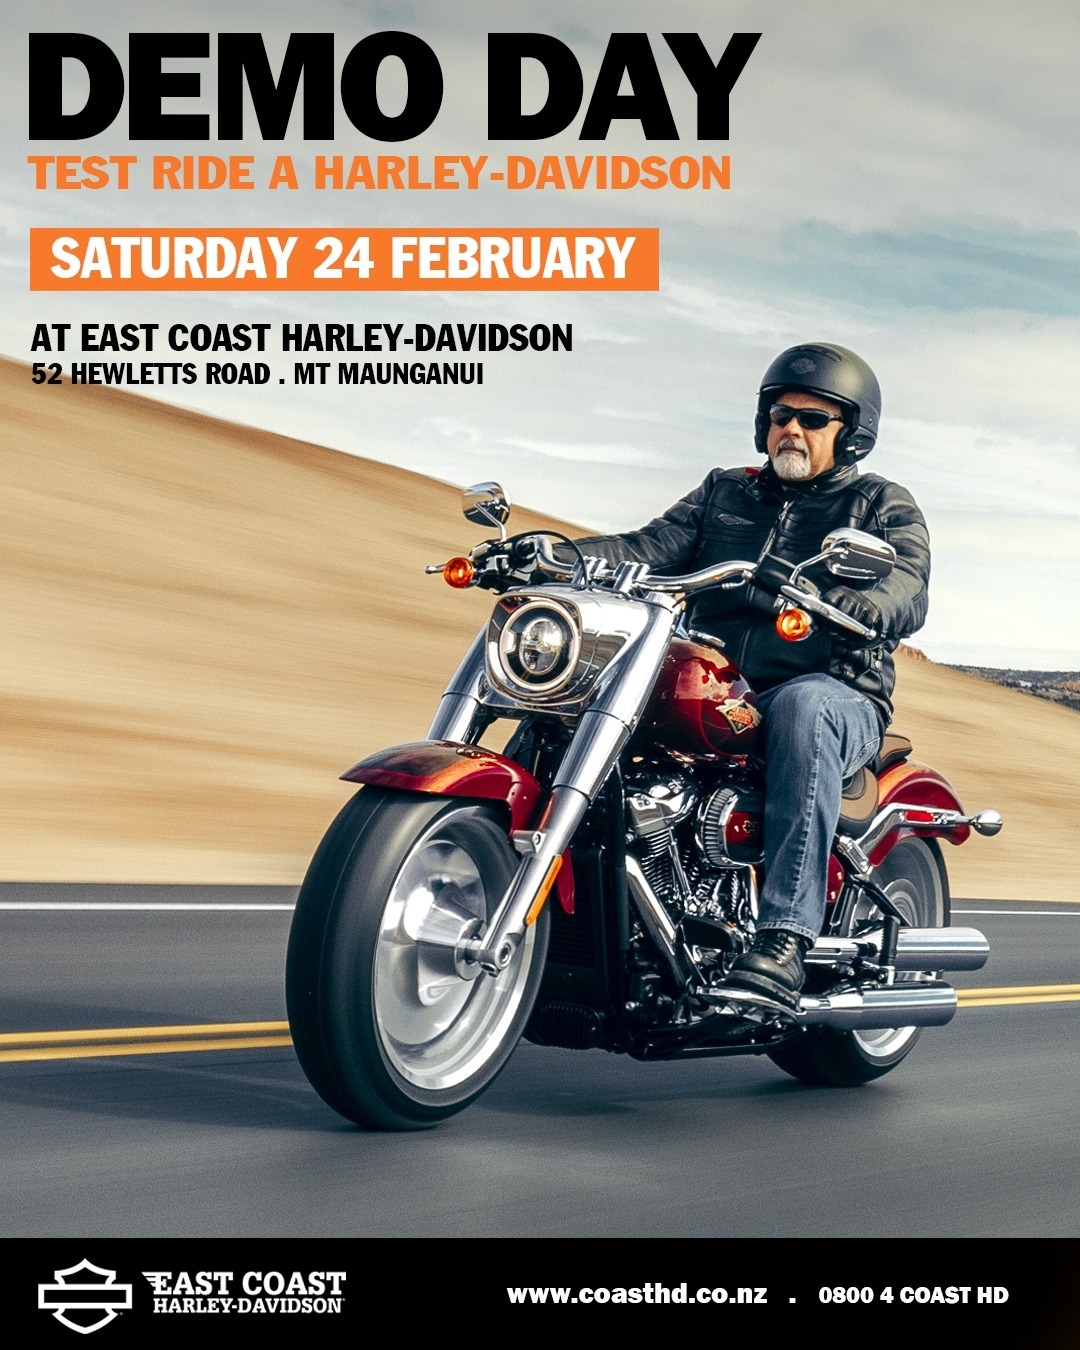 East Coast Harley-Davidson